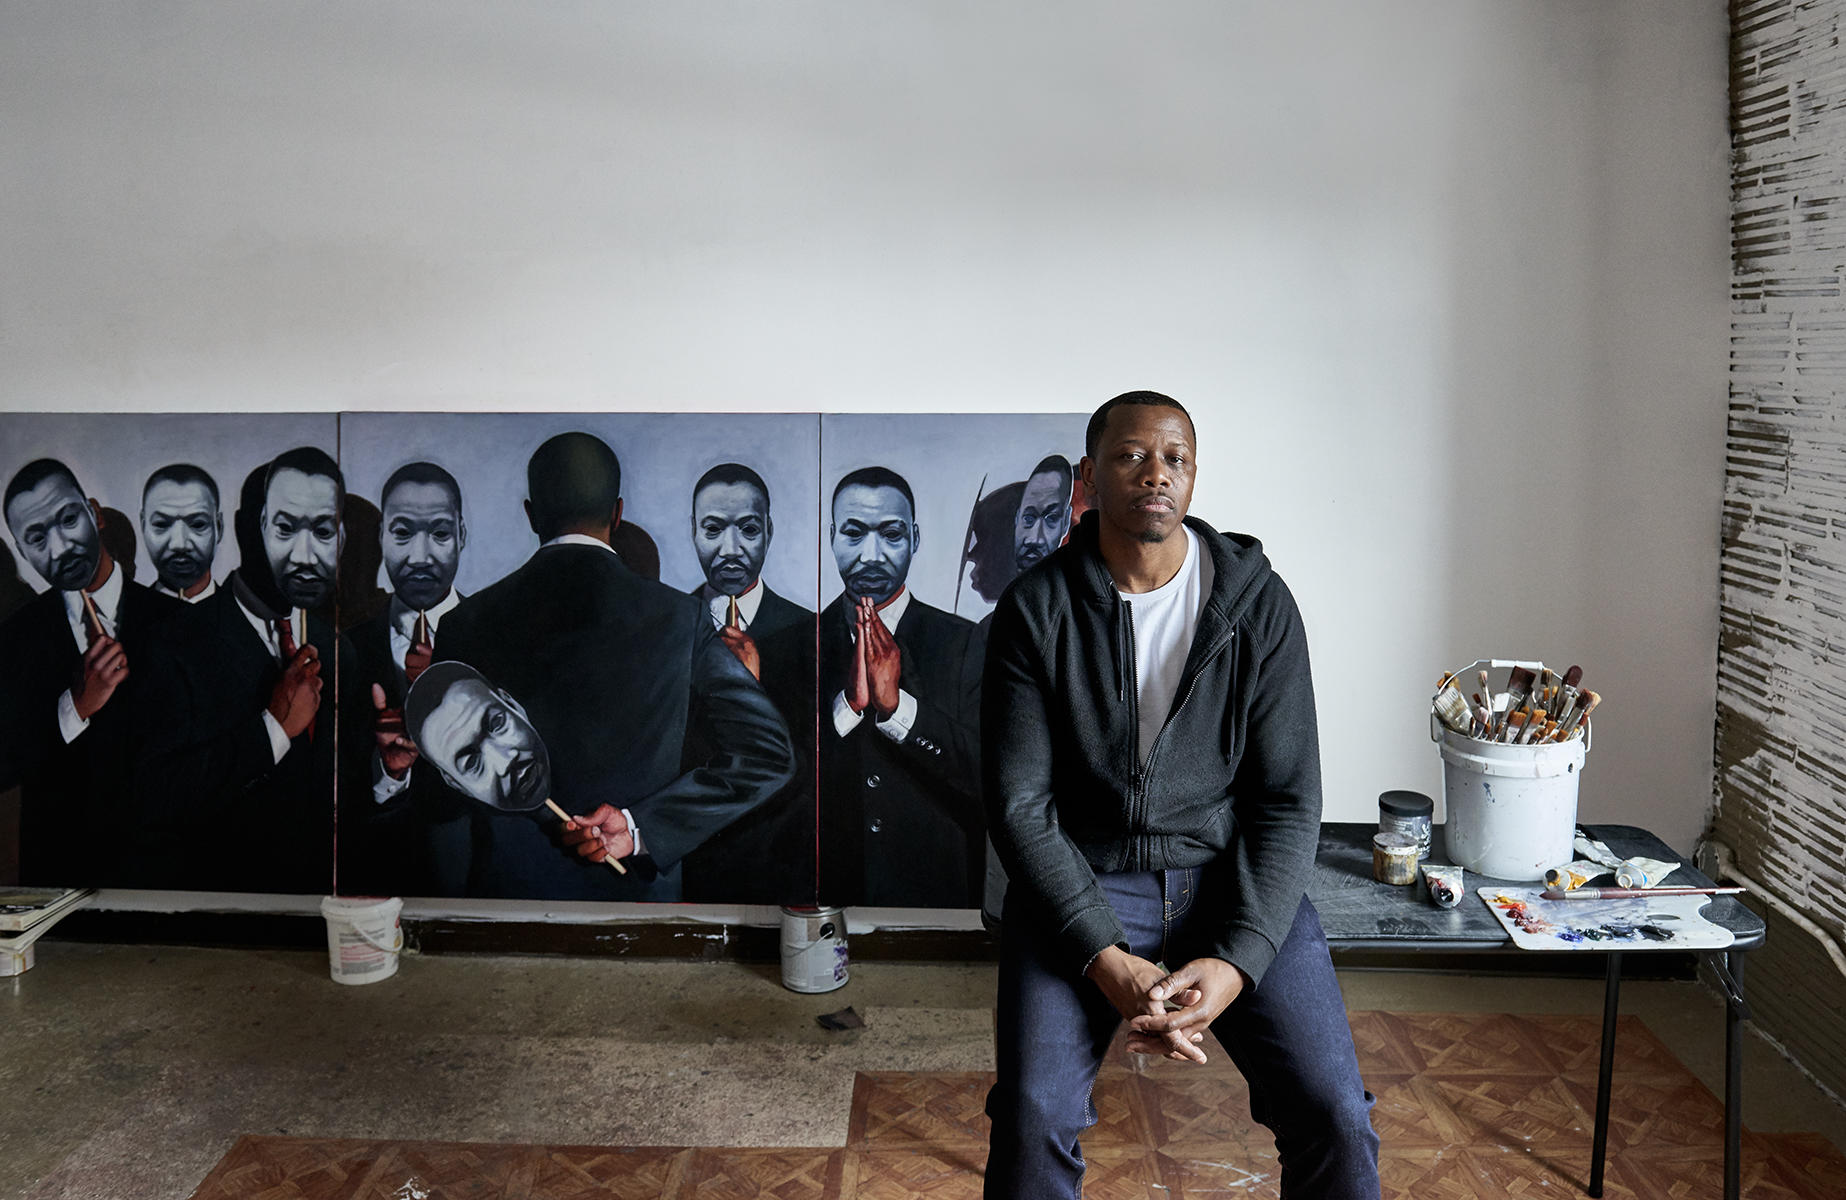 Tylonn Sawyer
Painter
Detroit
"The Dream is Now" : Portraits : MICHEL ARNAUD PHOTOGRAPHY